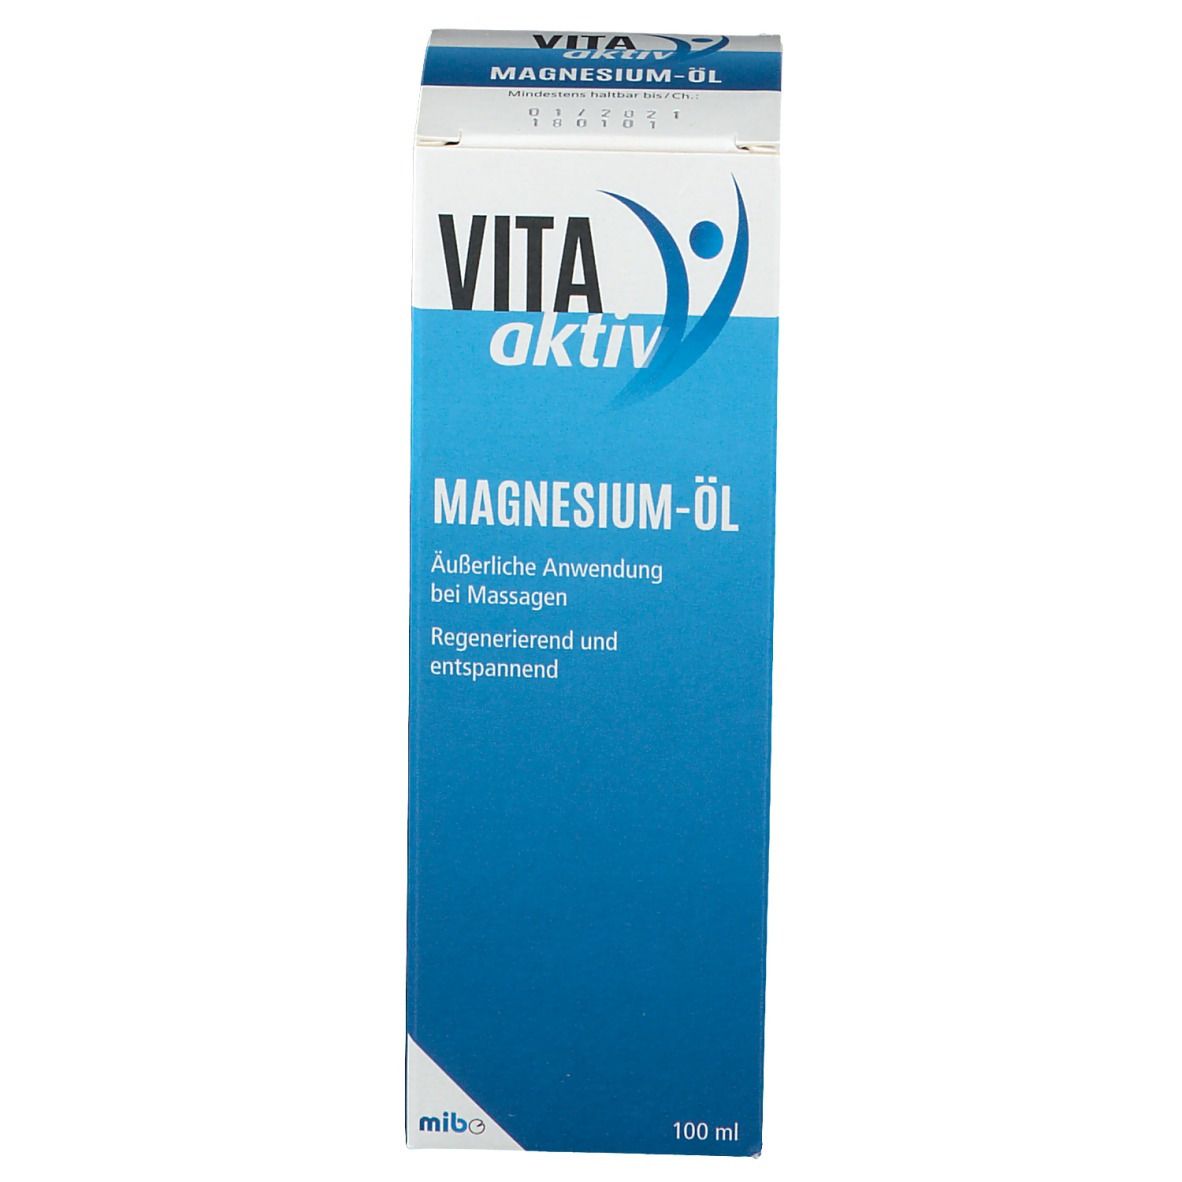 Vita aktiv Magnesium-Öl